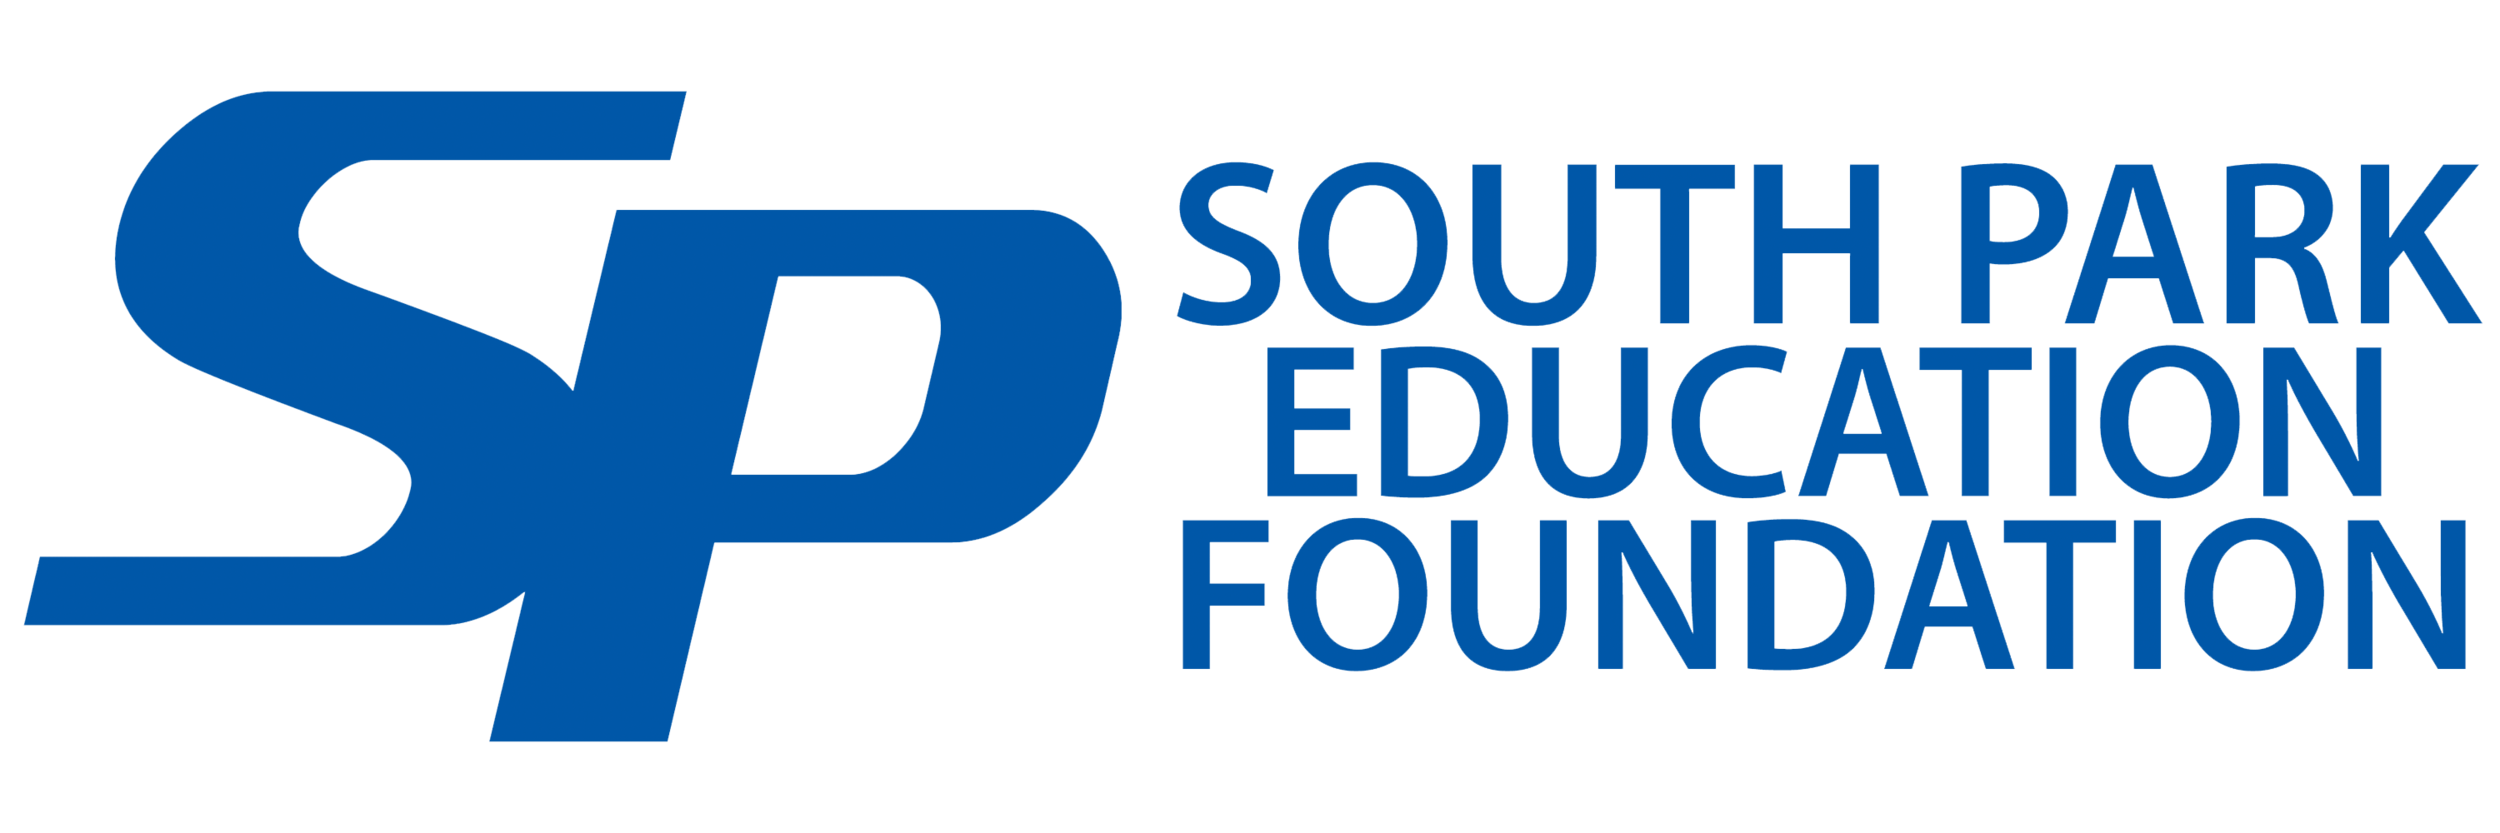 South Park Education Foundation